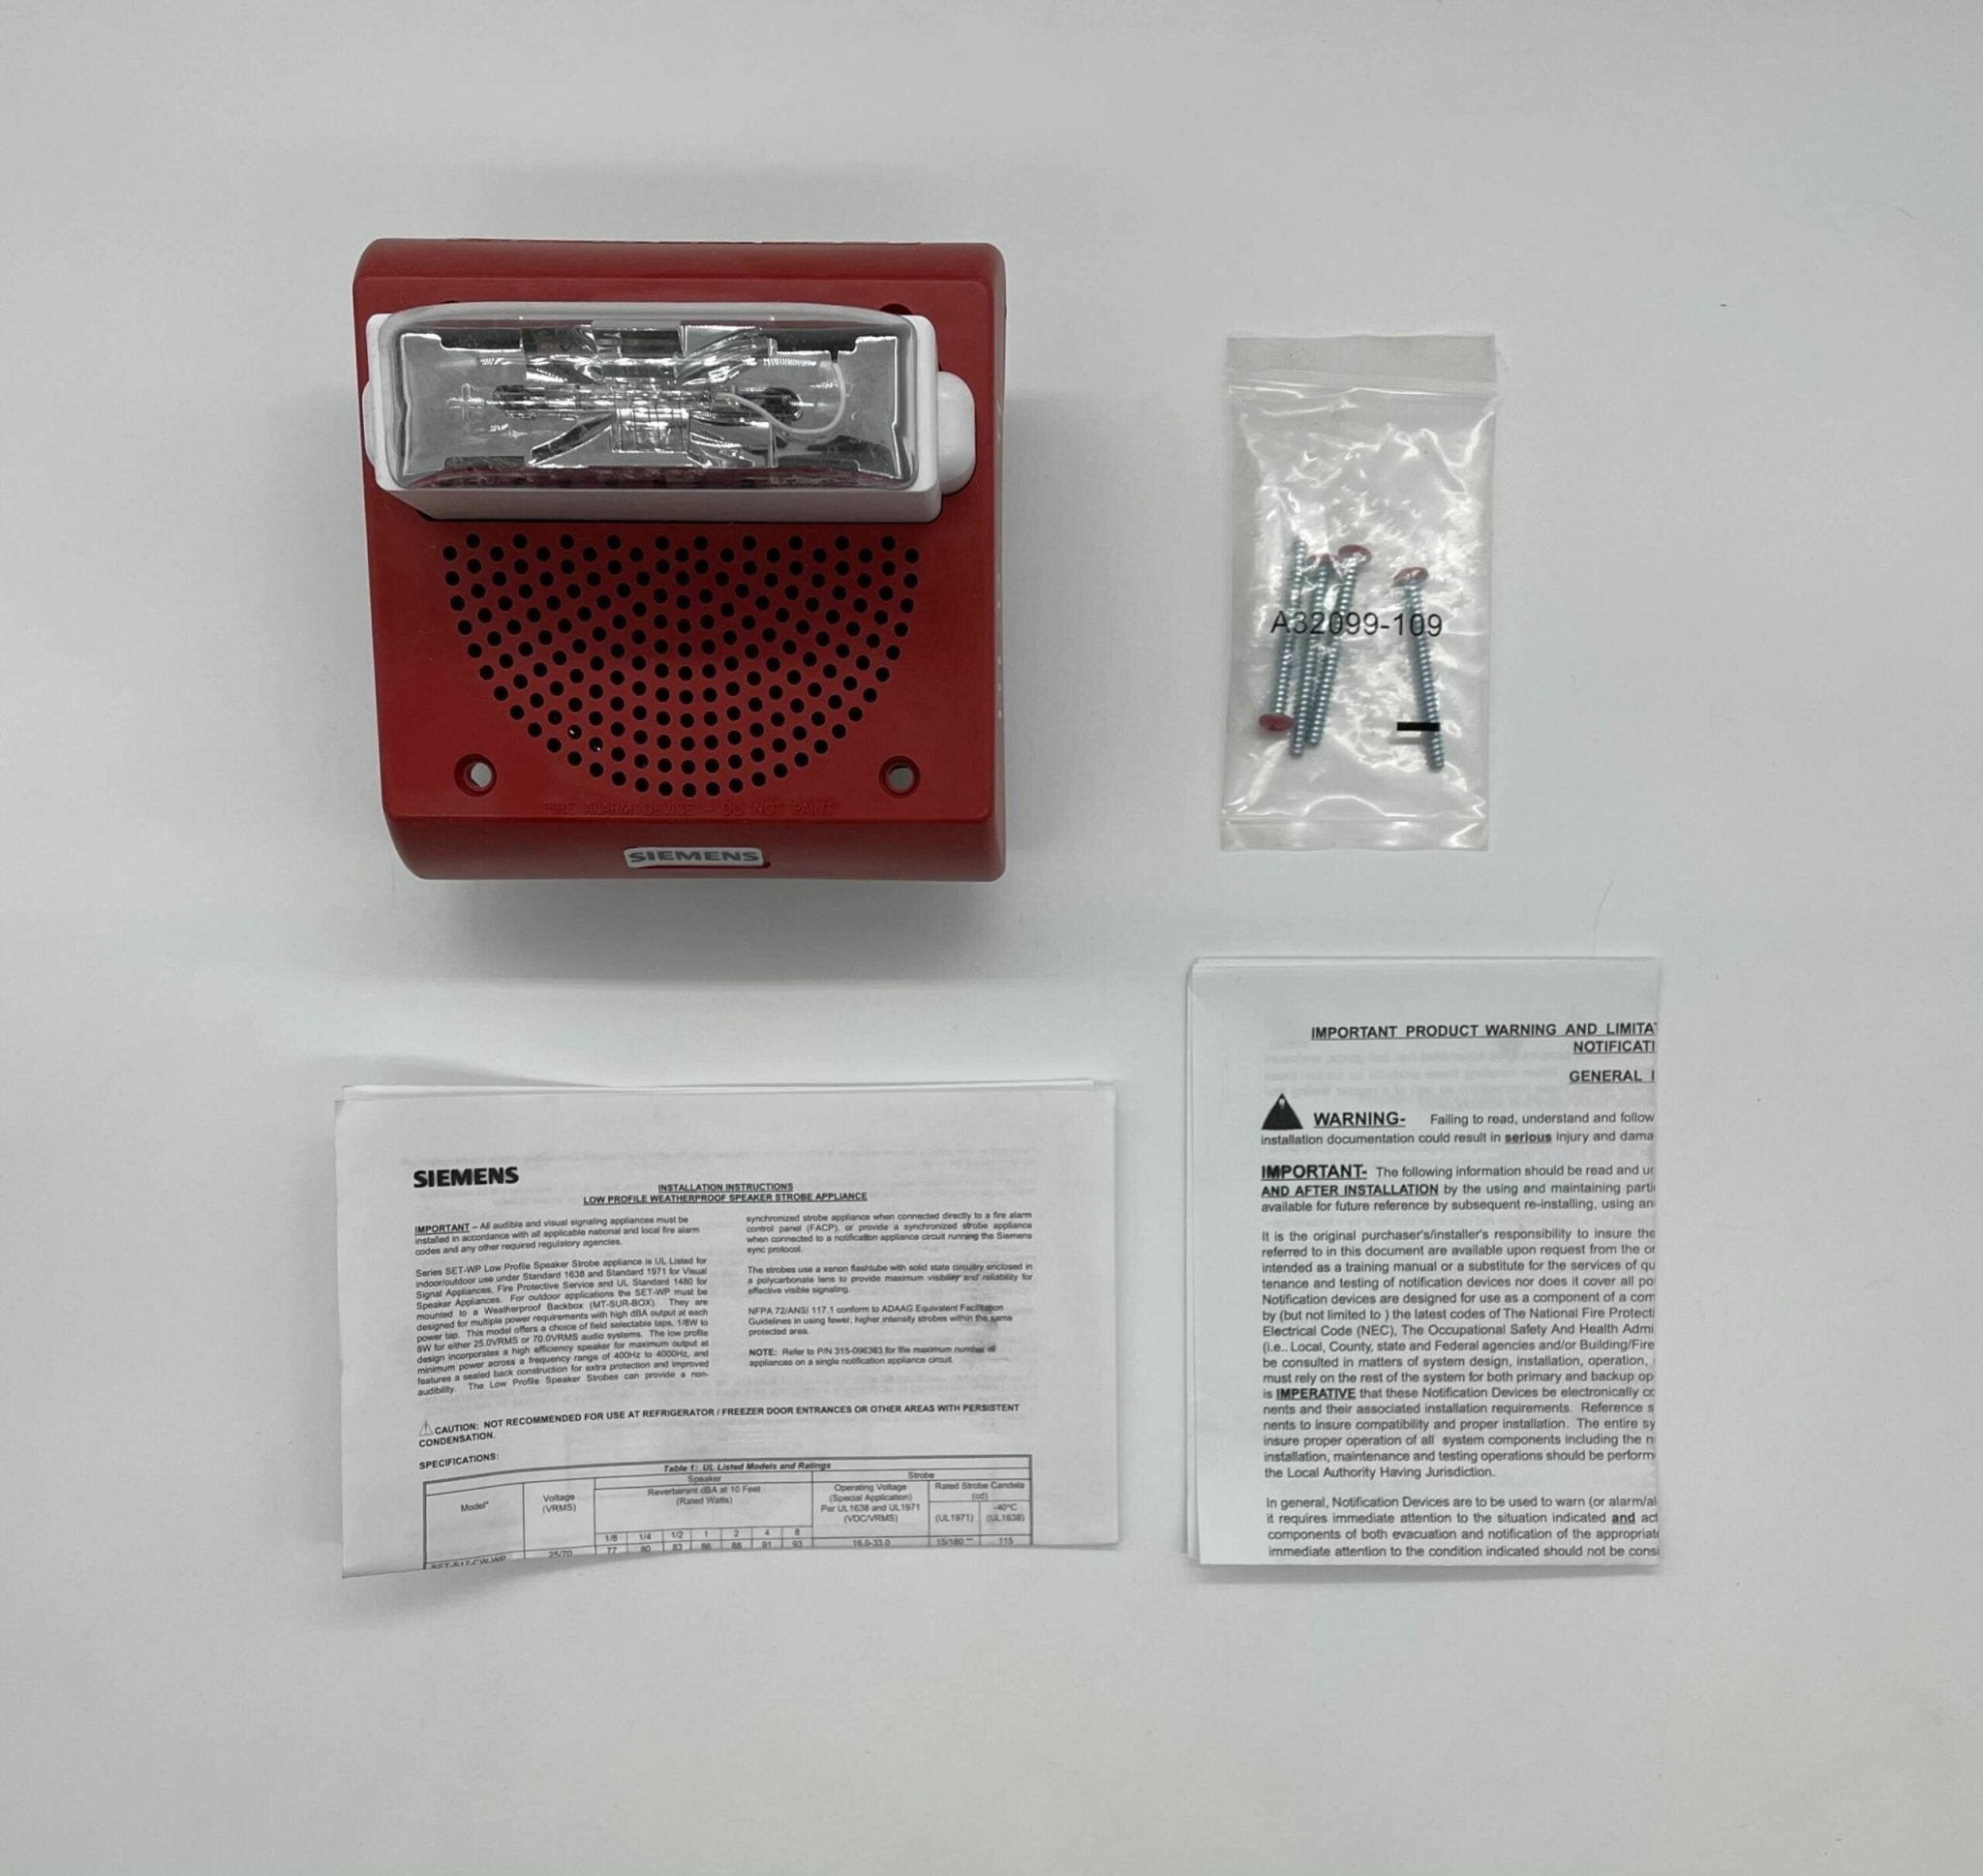 Siemens SET-185-R-WP - The Fire Alarm Supplier